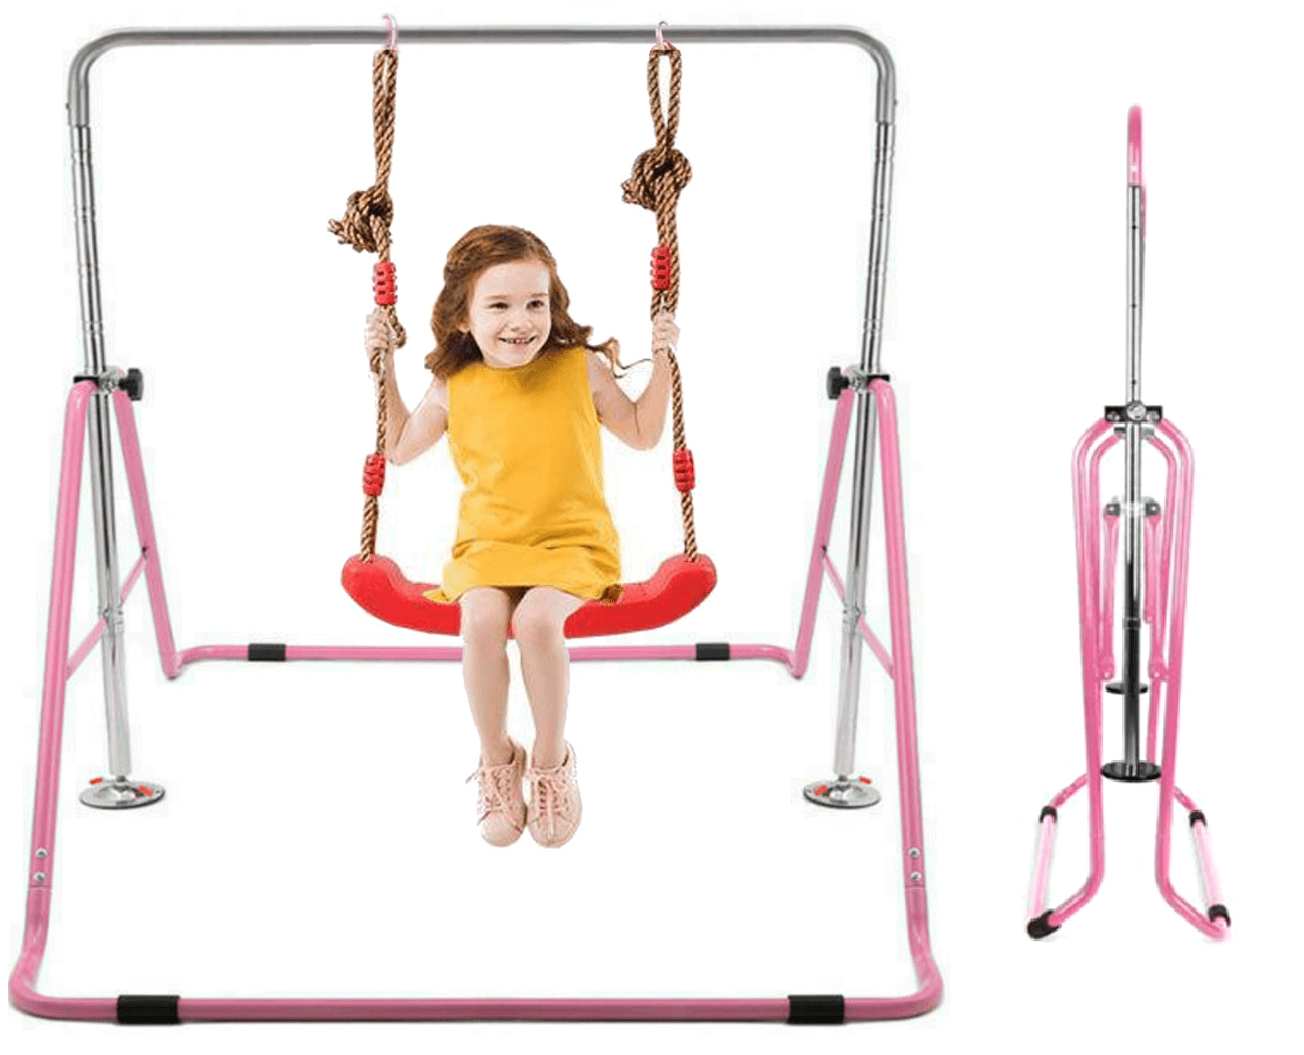 Hudora Adjustable Gymnastic Horizontal Bar Set 4 Heights Kids Outdoor Gym Exercise New 